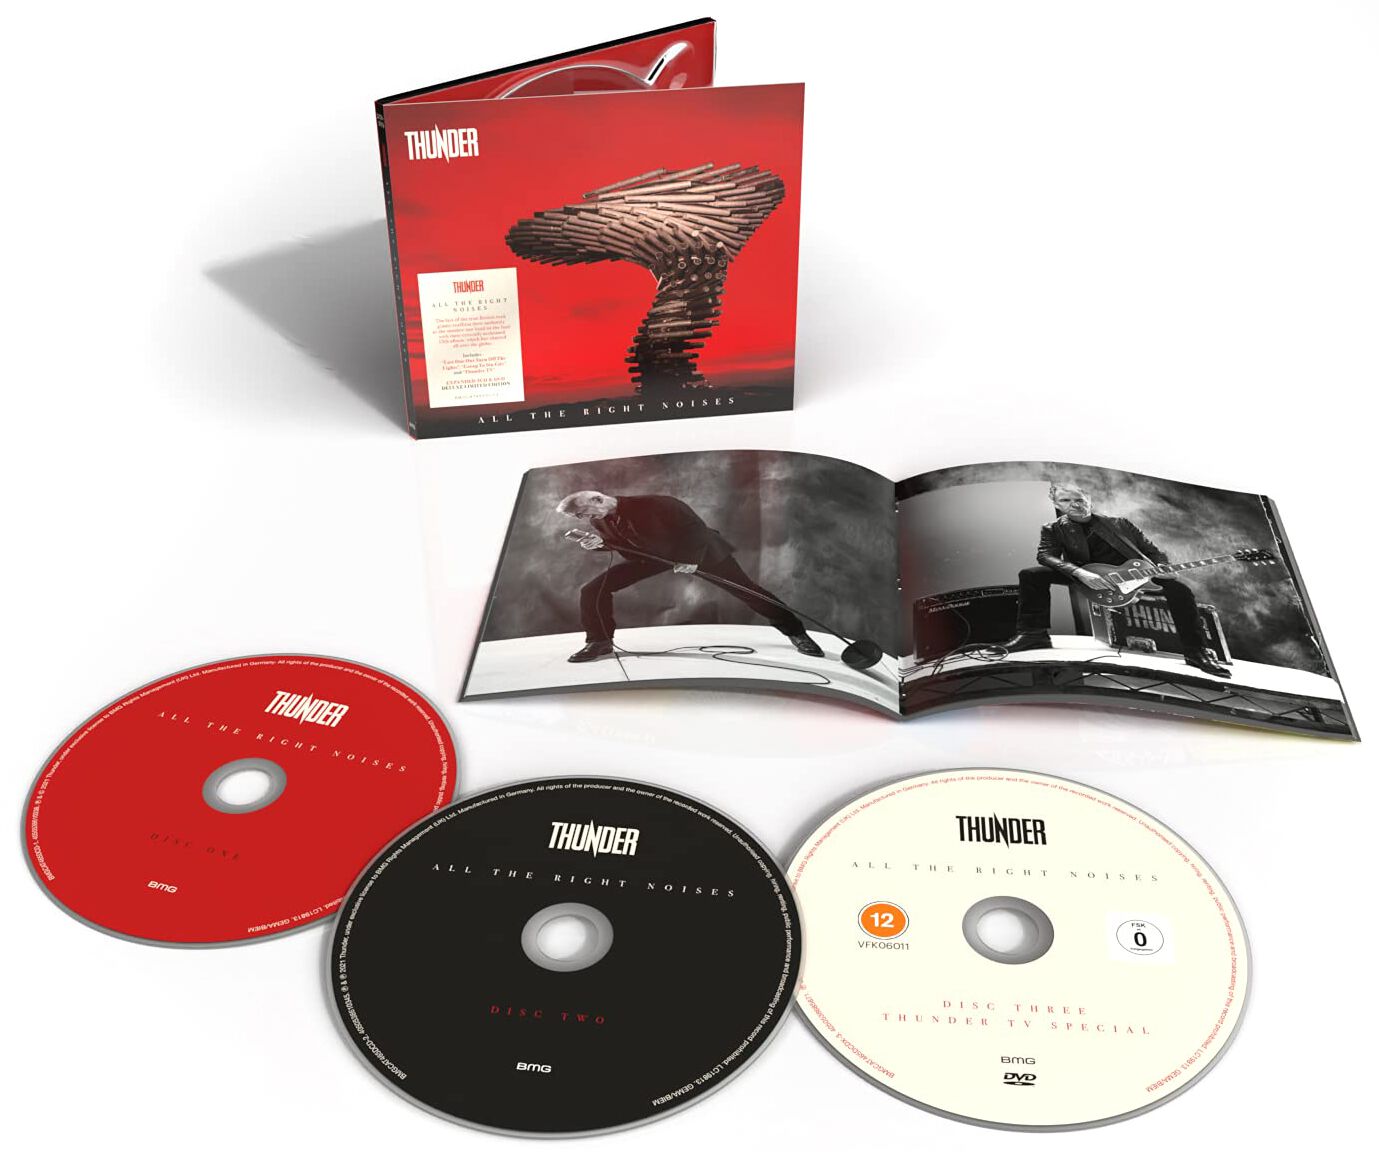 Image of Thunder All the right noises 2-CD & DVD Standard